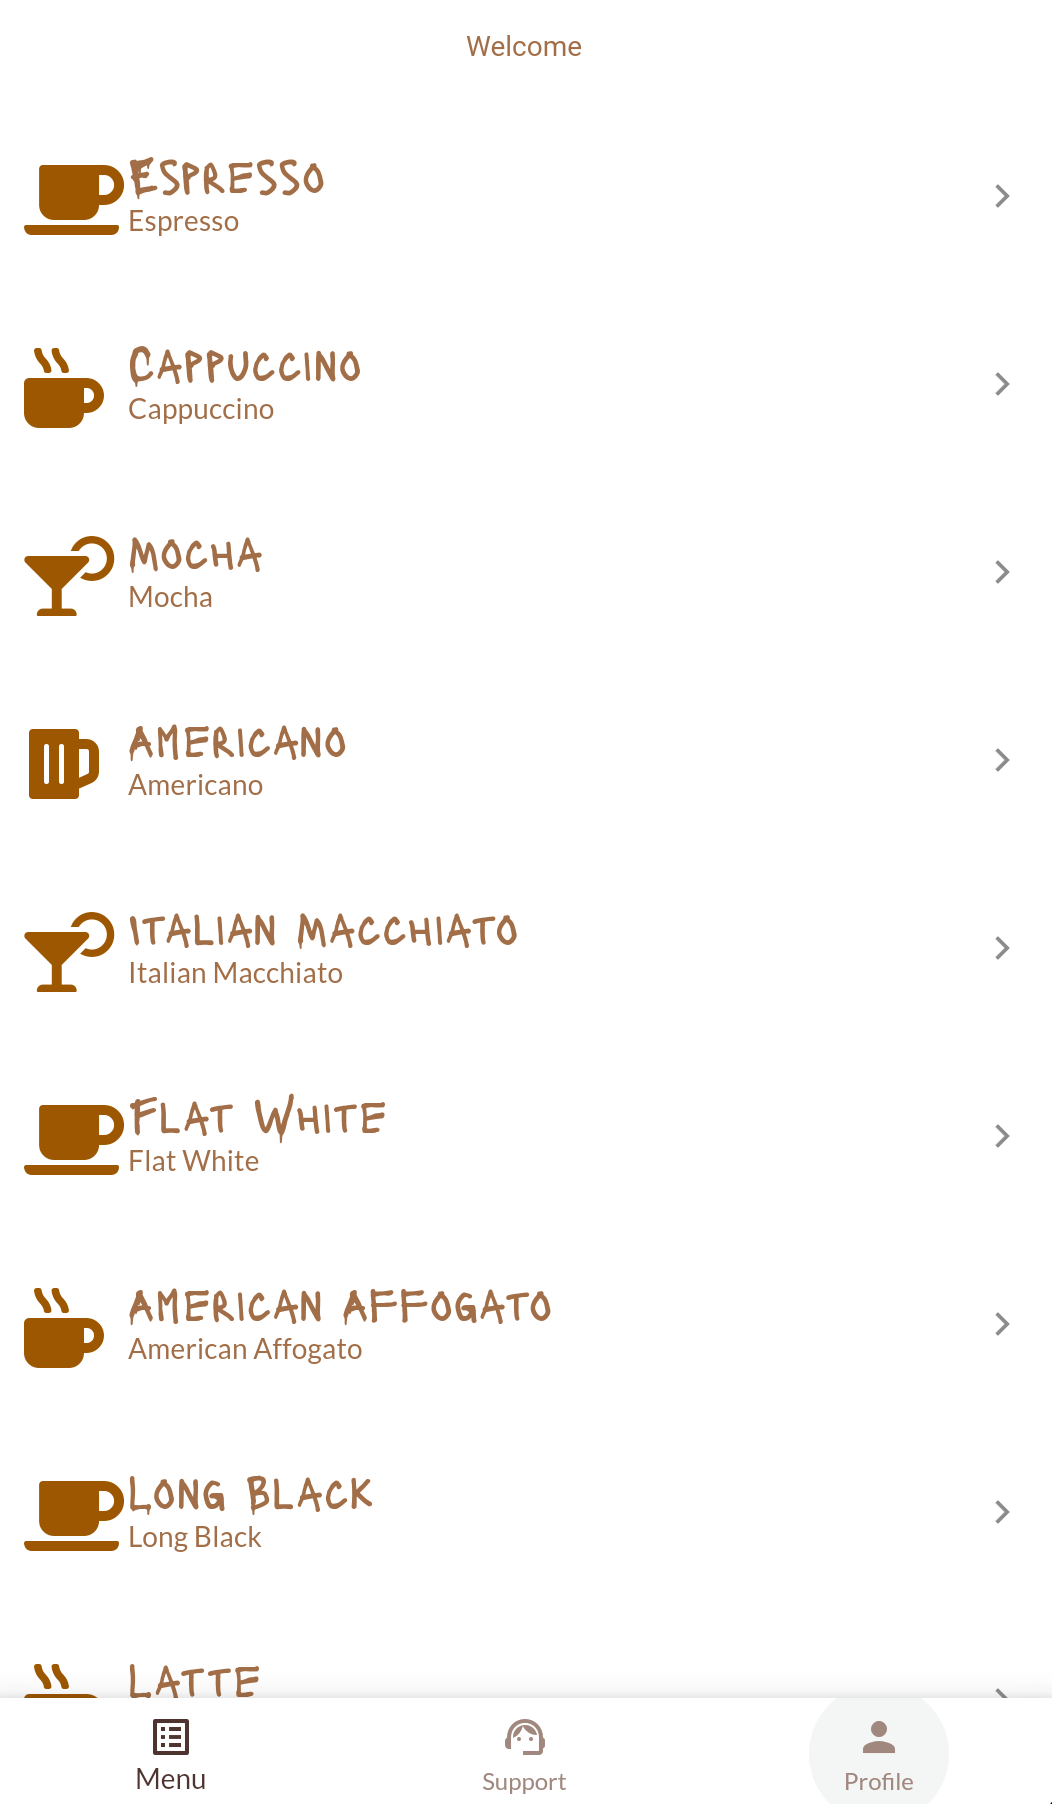 The MJ Coffee App’s “Menu” screen